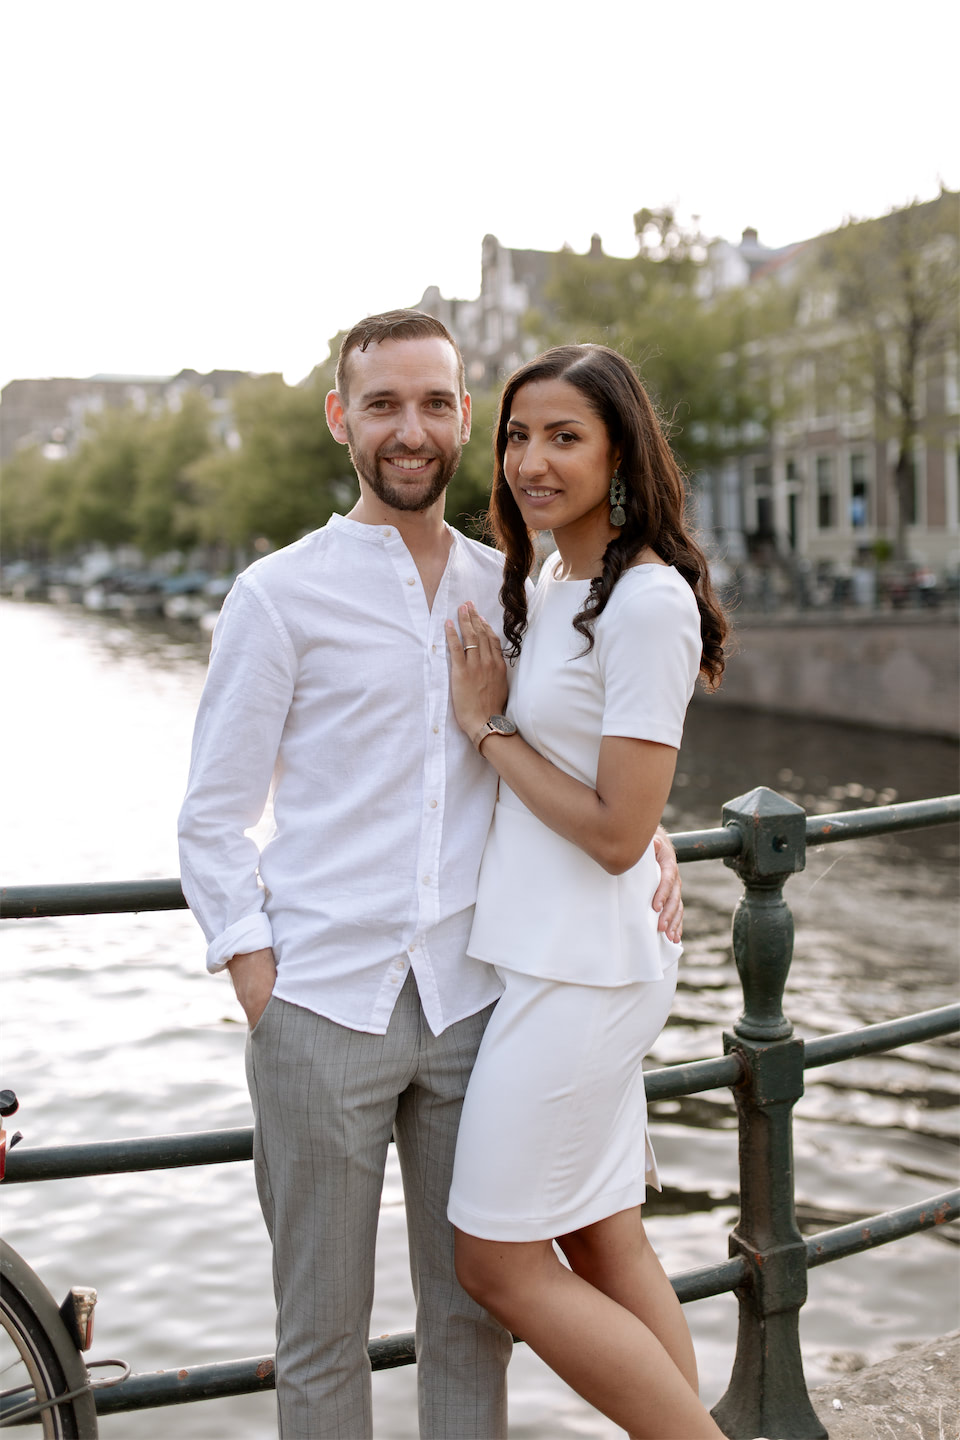 Thaïsa en Roy leggen mooie herinneringen vast tijdens hun loveshoot in Amsterdam